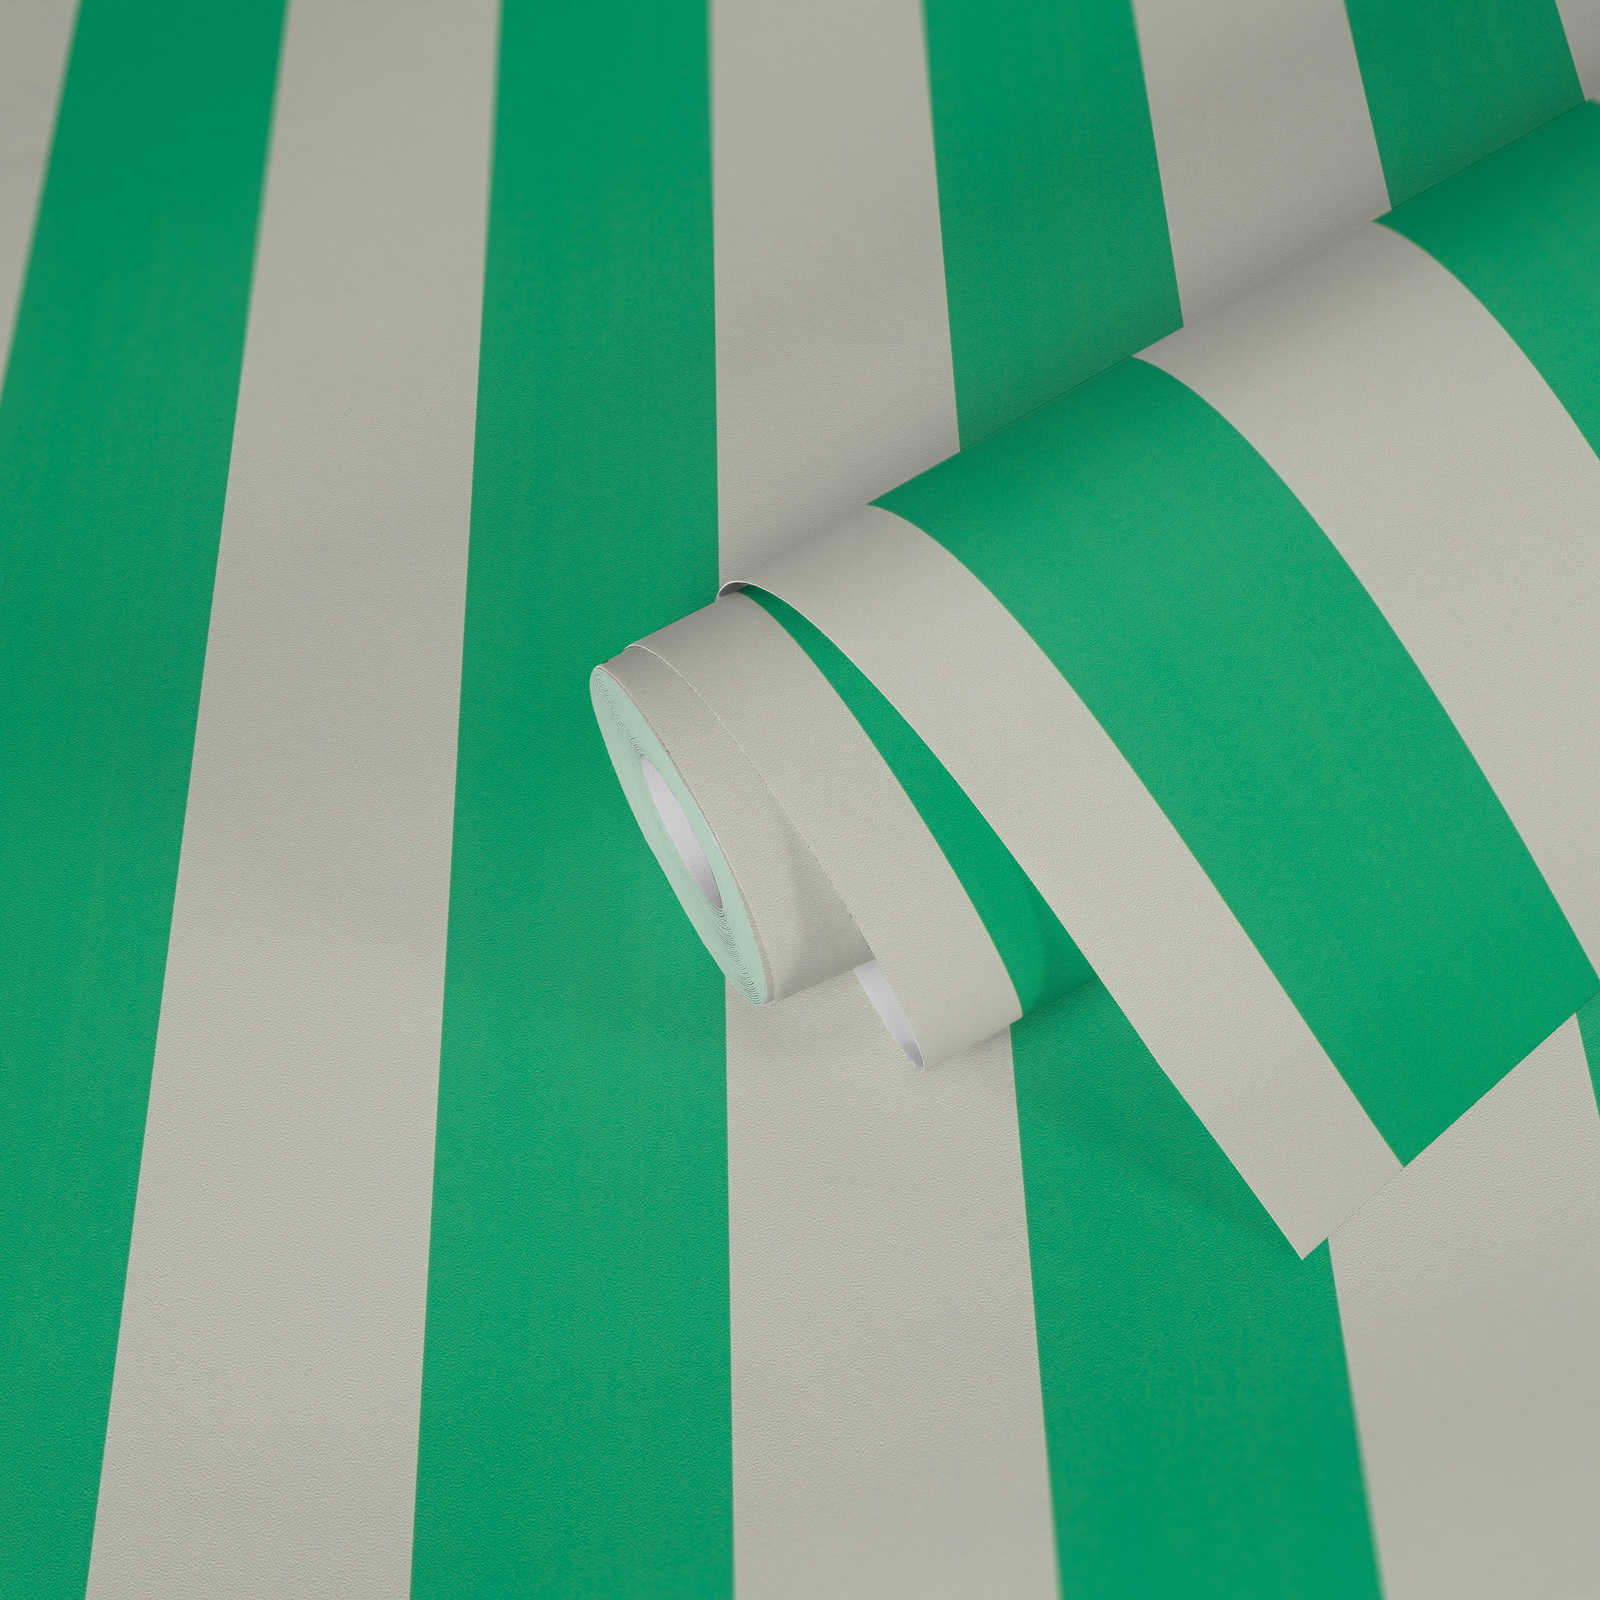             Carta da parati a righe con struttura leggera - verde, bianco
        